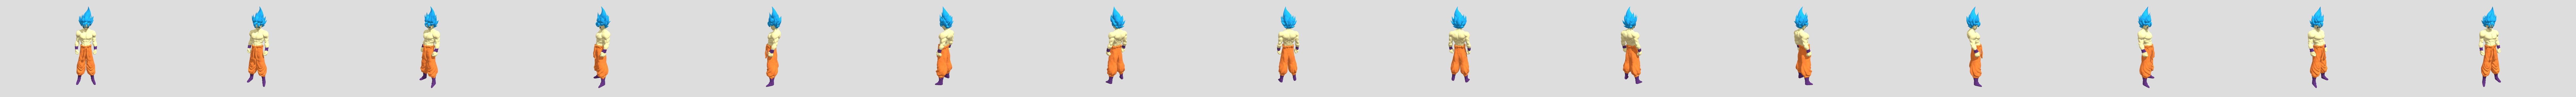 Goku SSJB/Super Saiyan Blue - Download Free 3D model by Justin